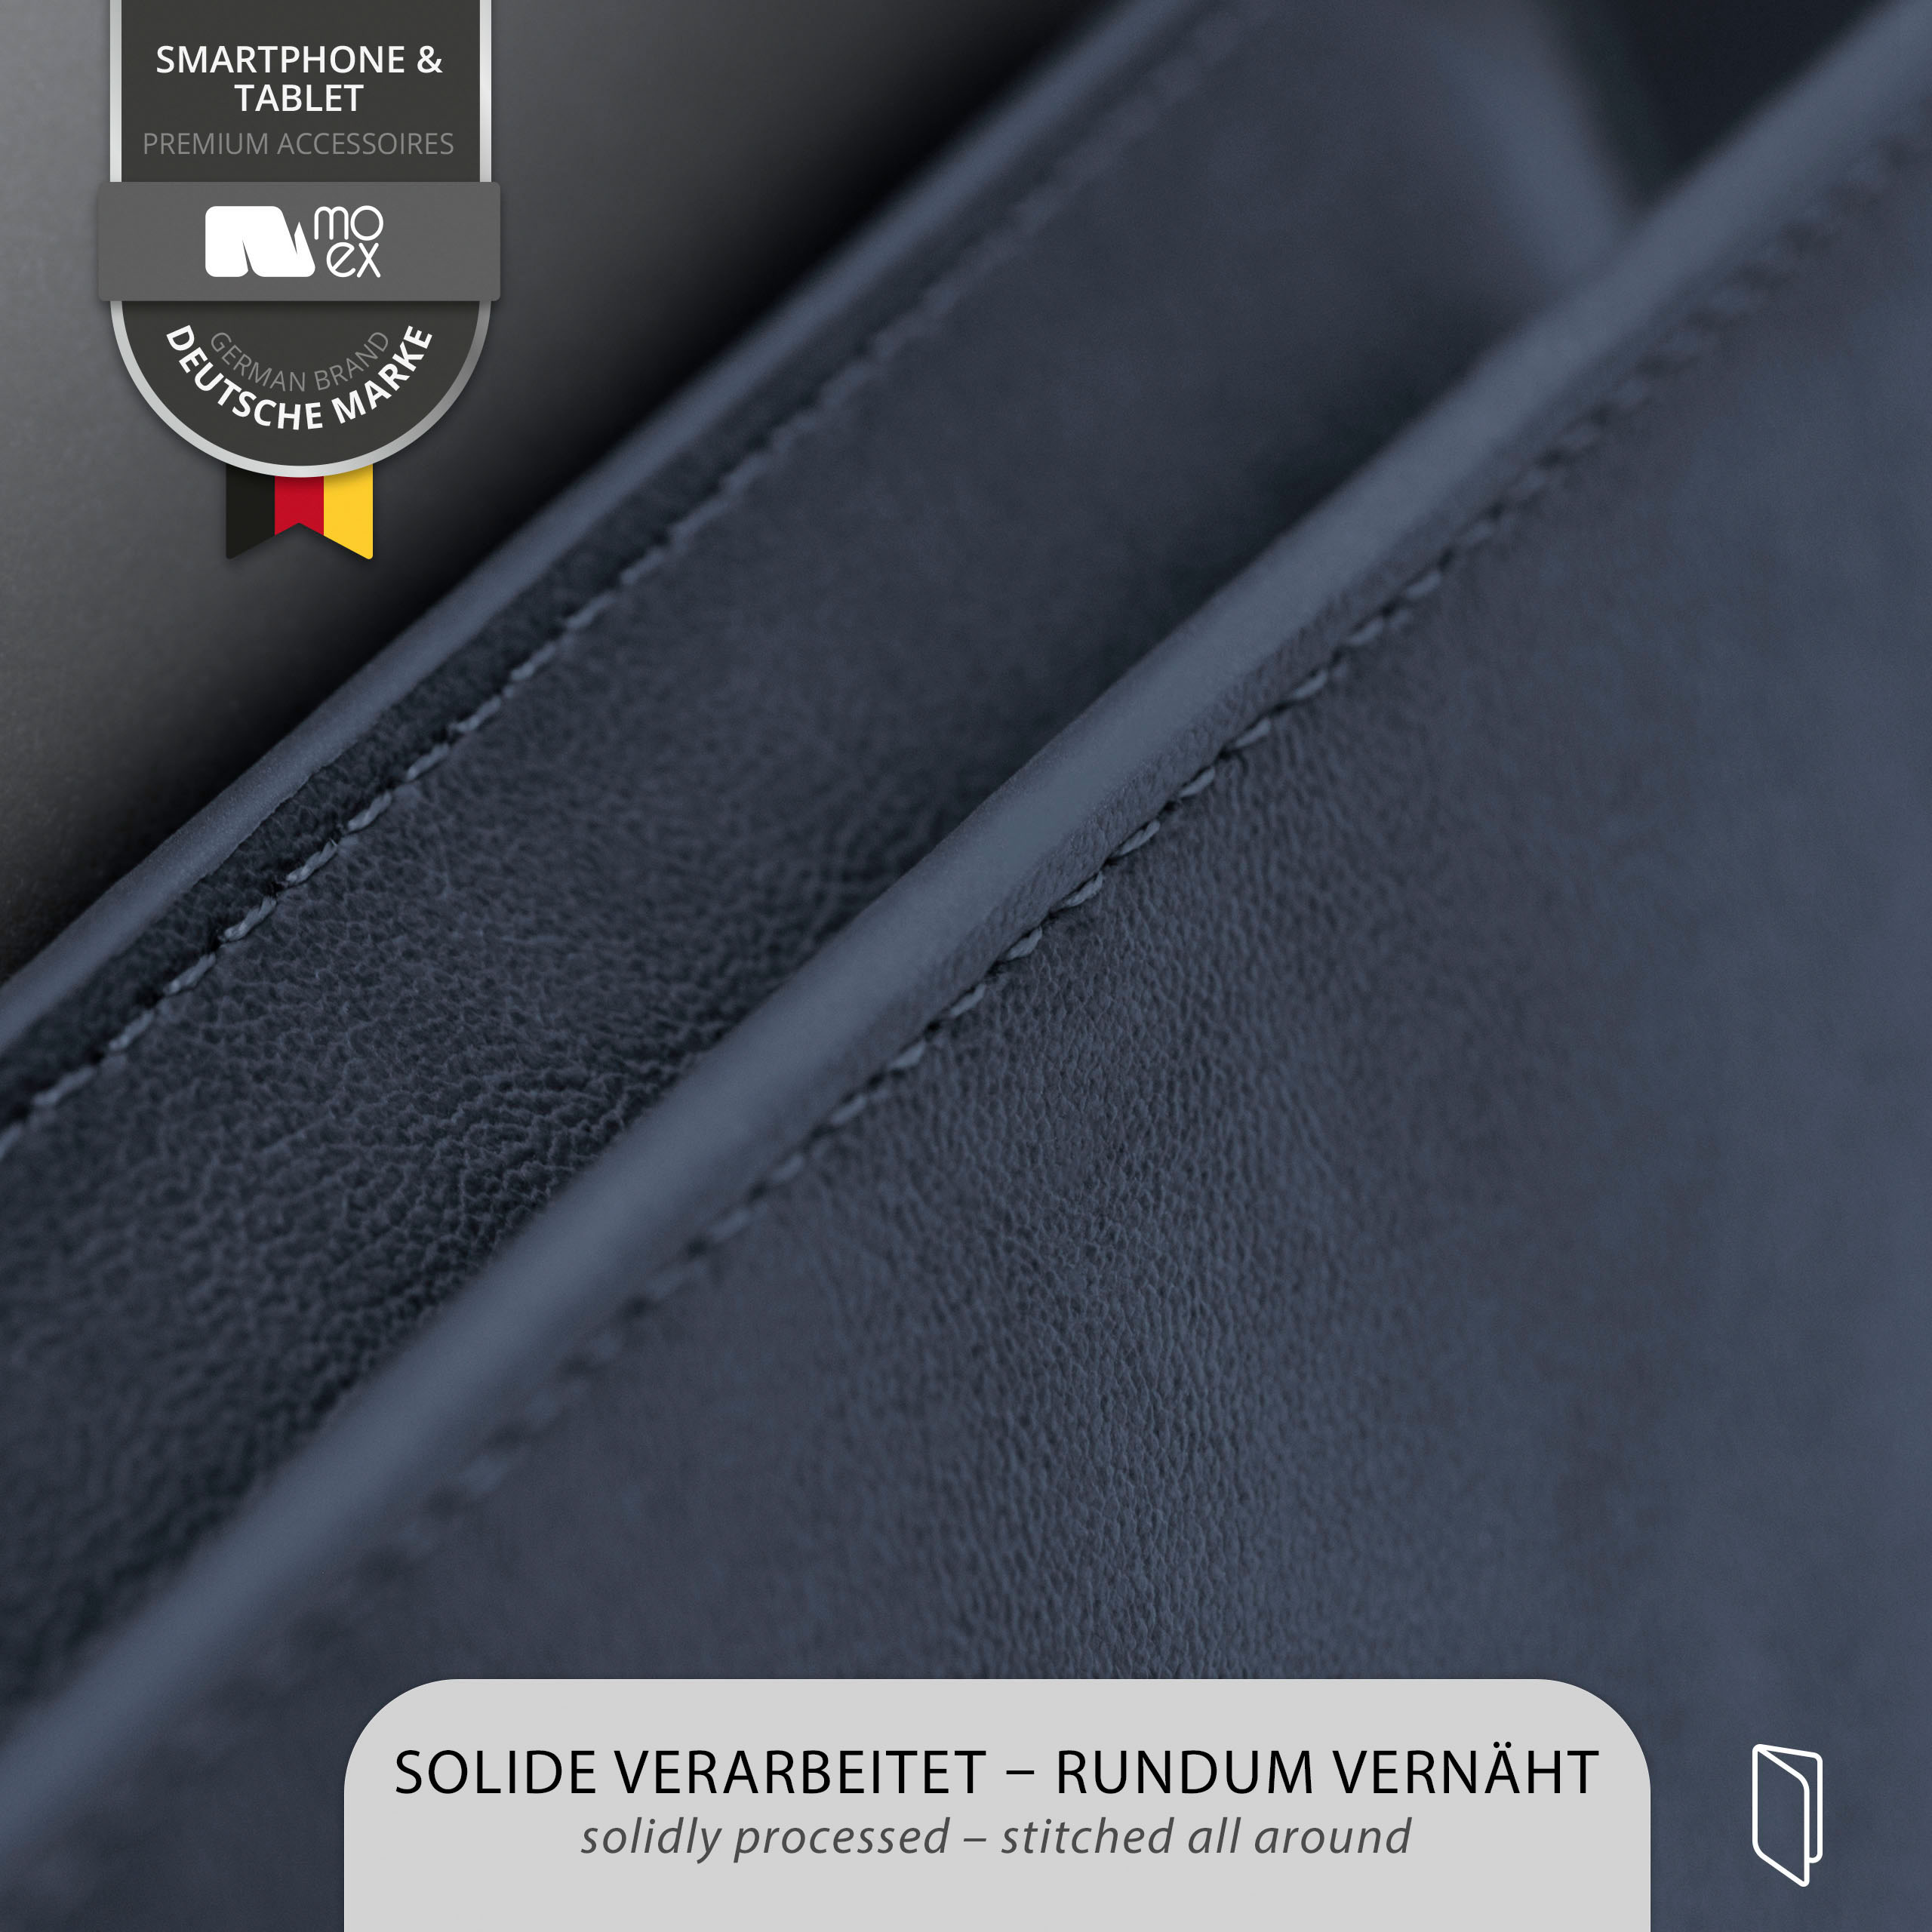 Dunkelblau Cover, MOEX Nokia, Case, Purse (2019), 105 Flip